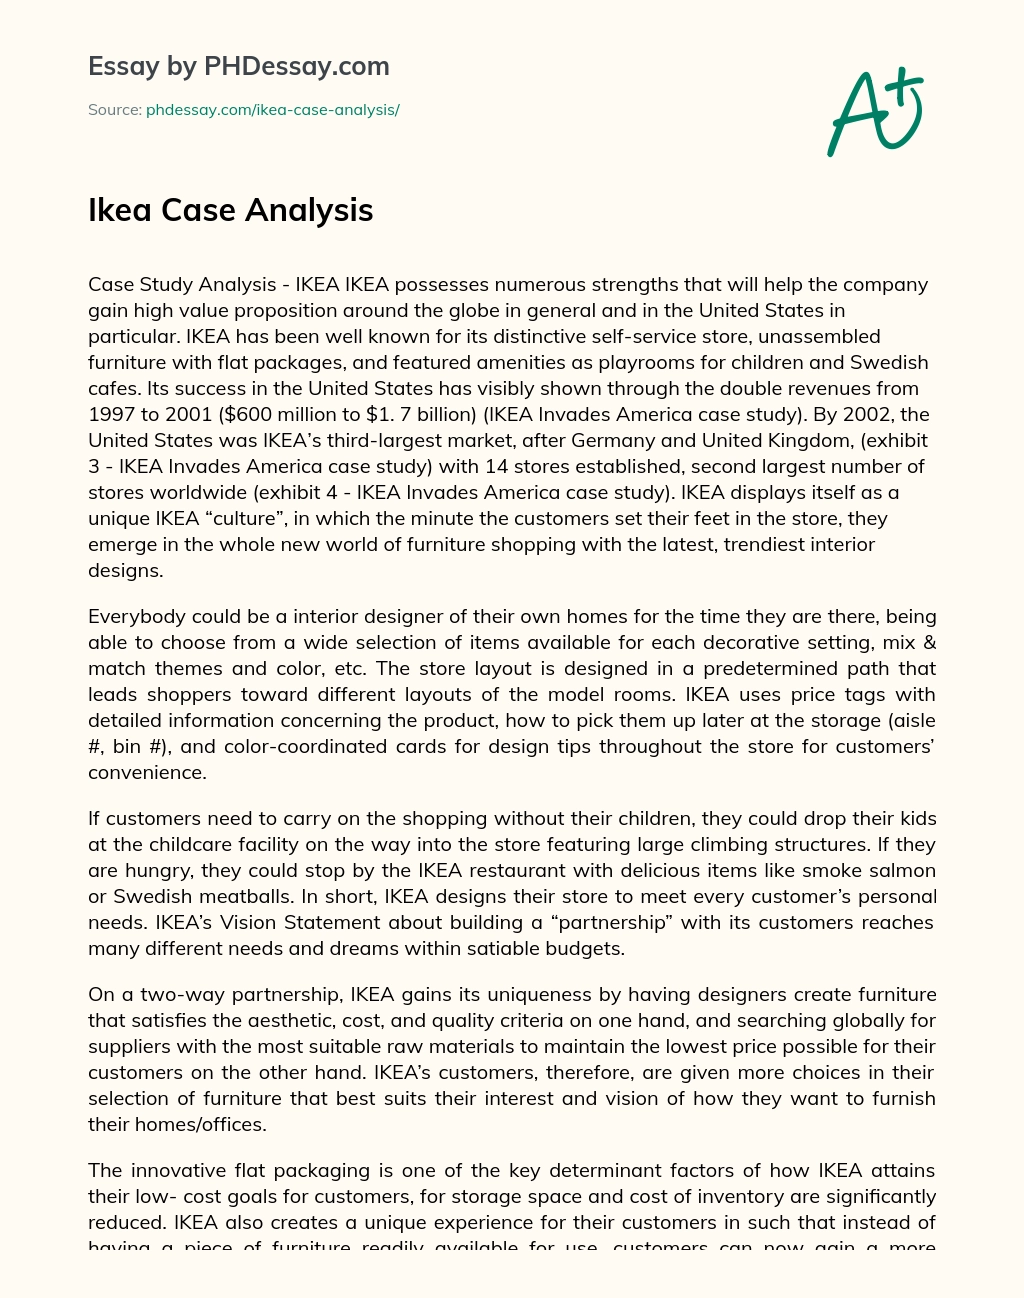 Ikea Case Analysis essay